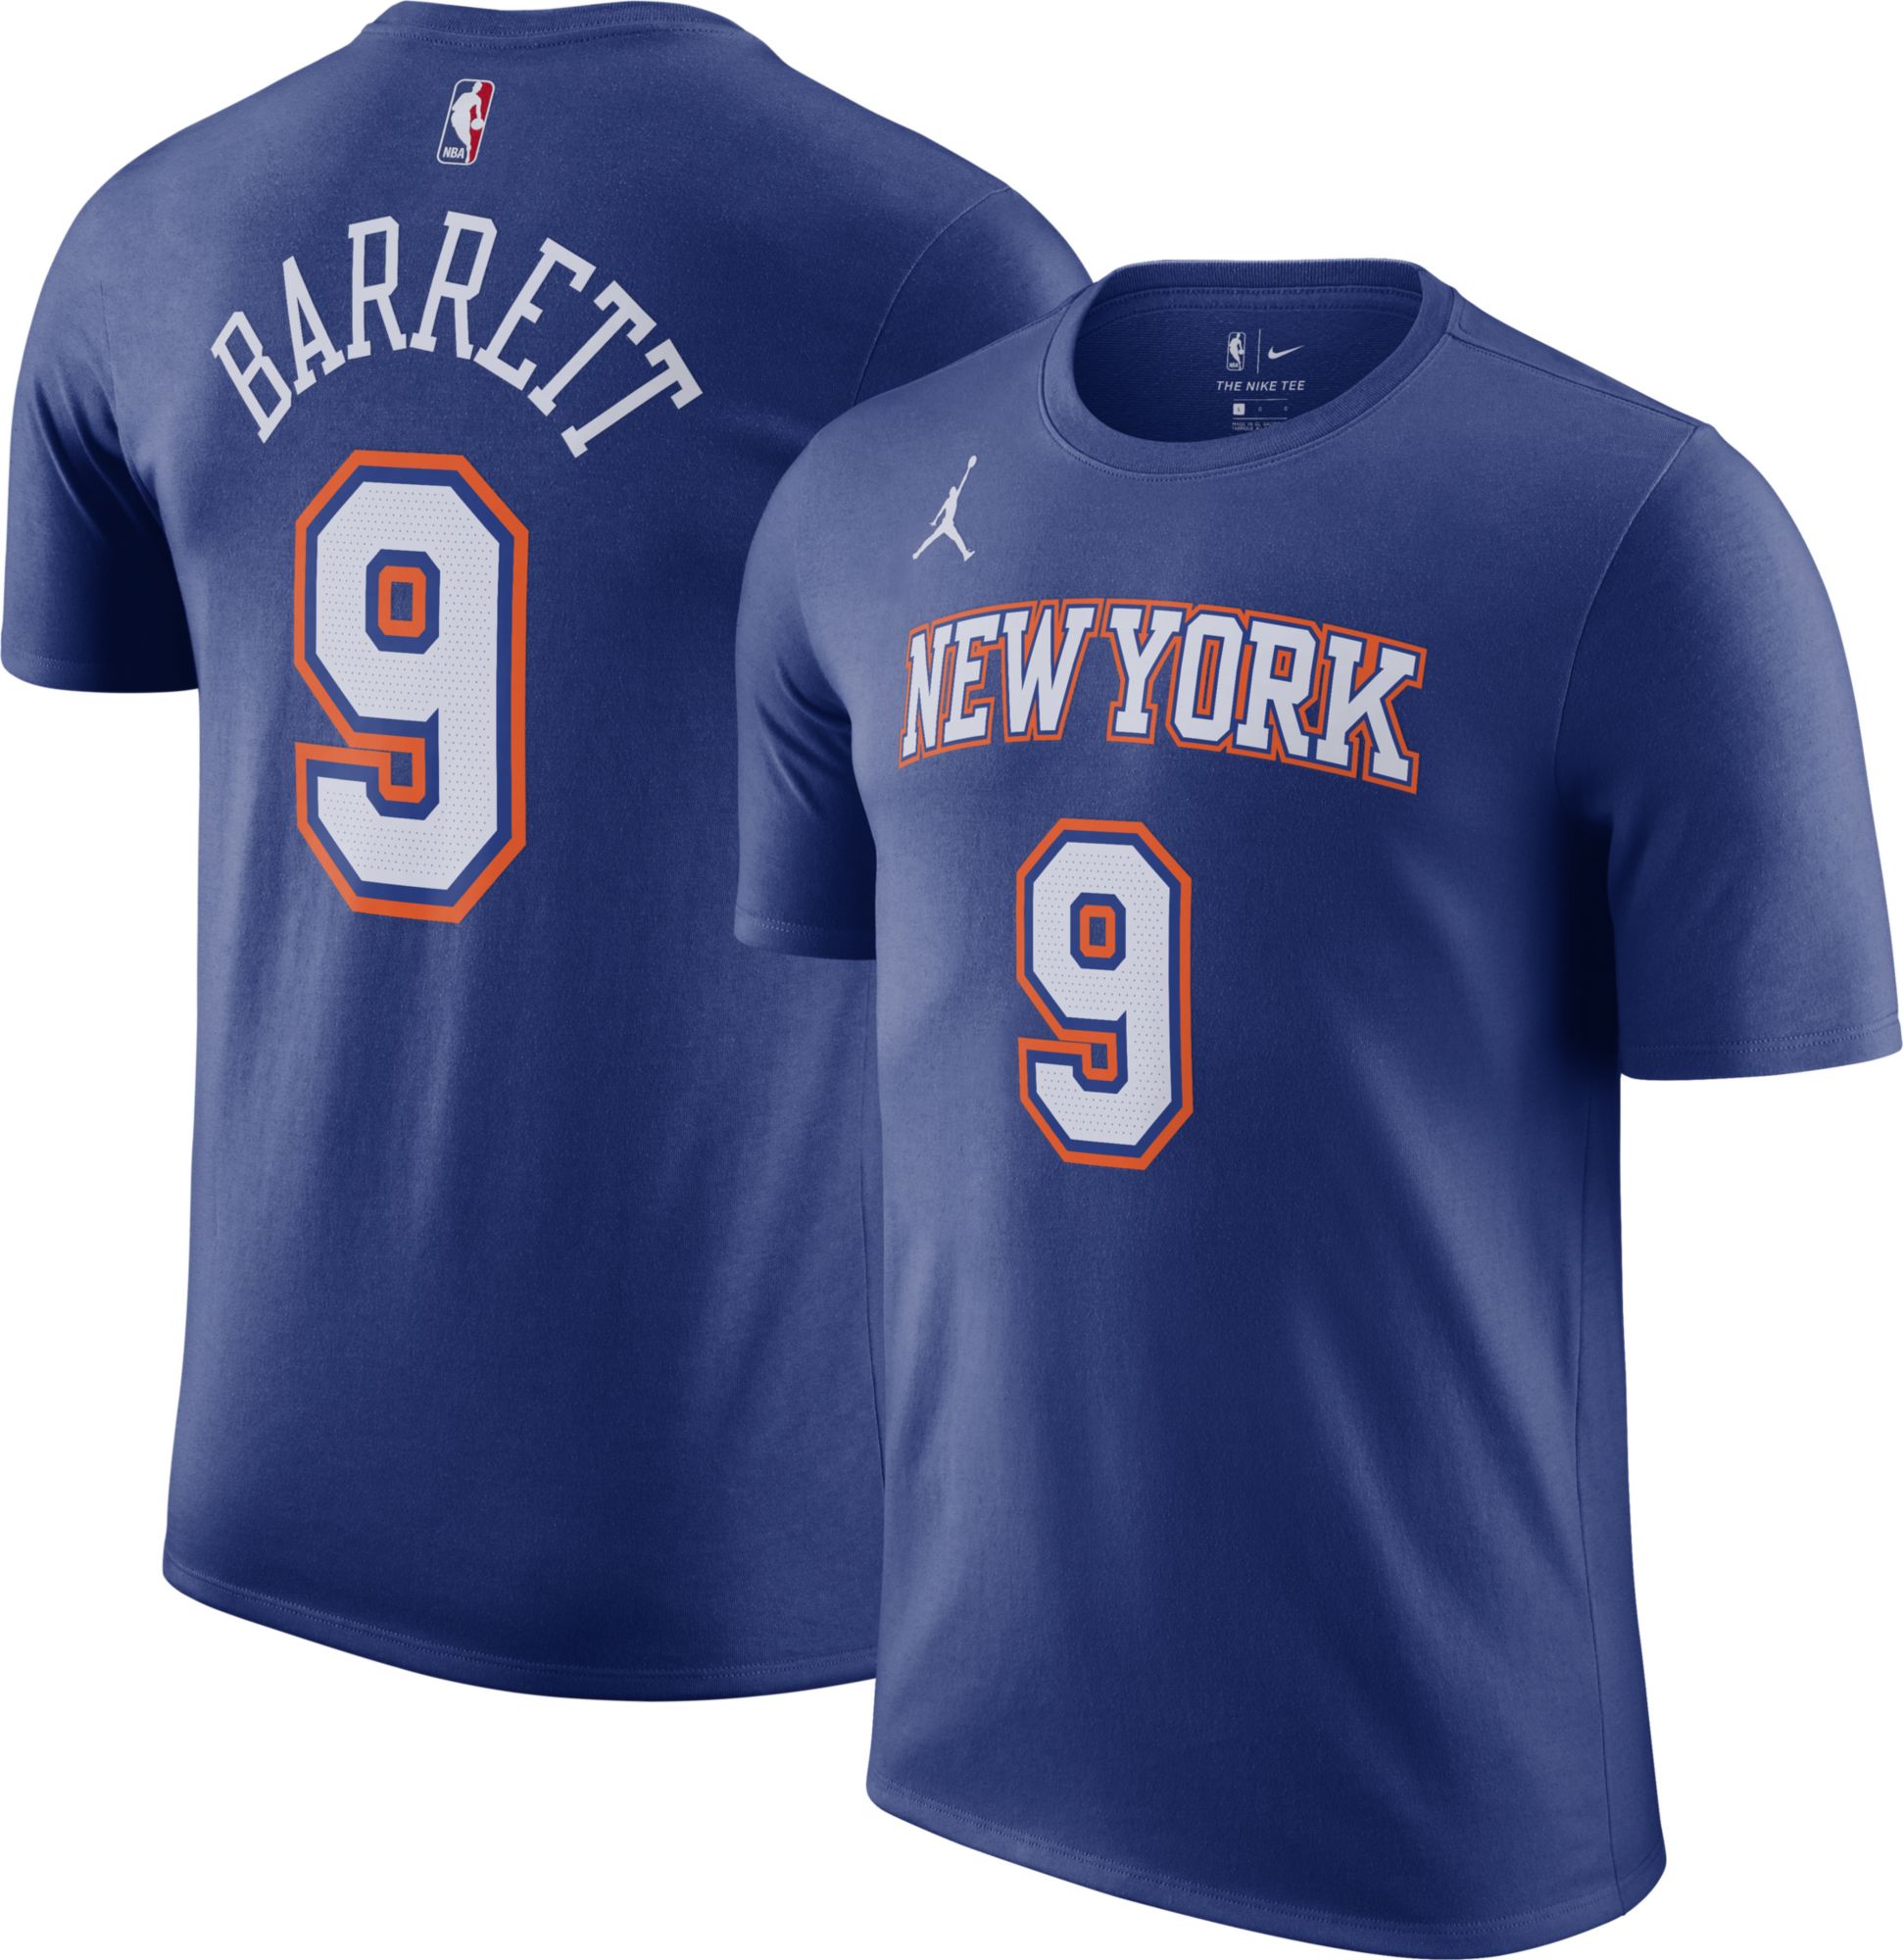 Jordan Men's New York Knicks RJ Barrett #9 Navy Dri-FIT Swingman